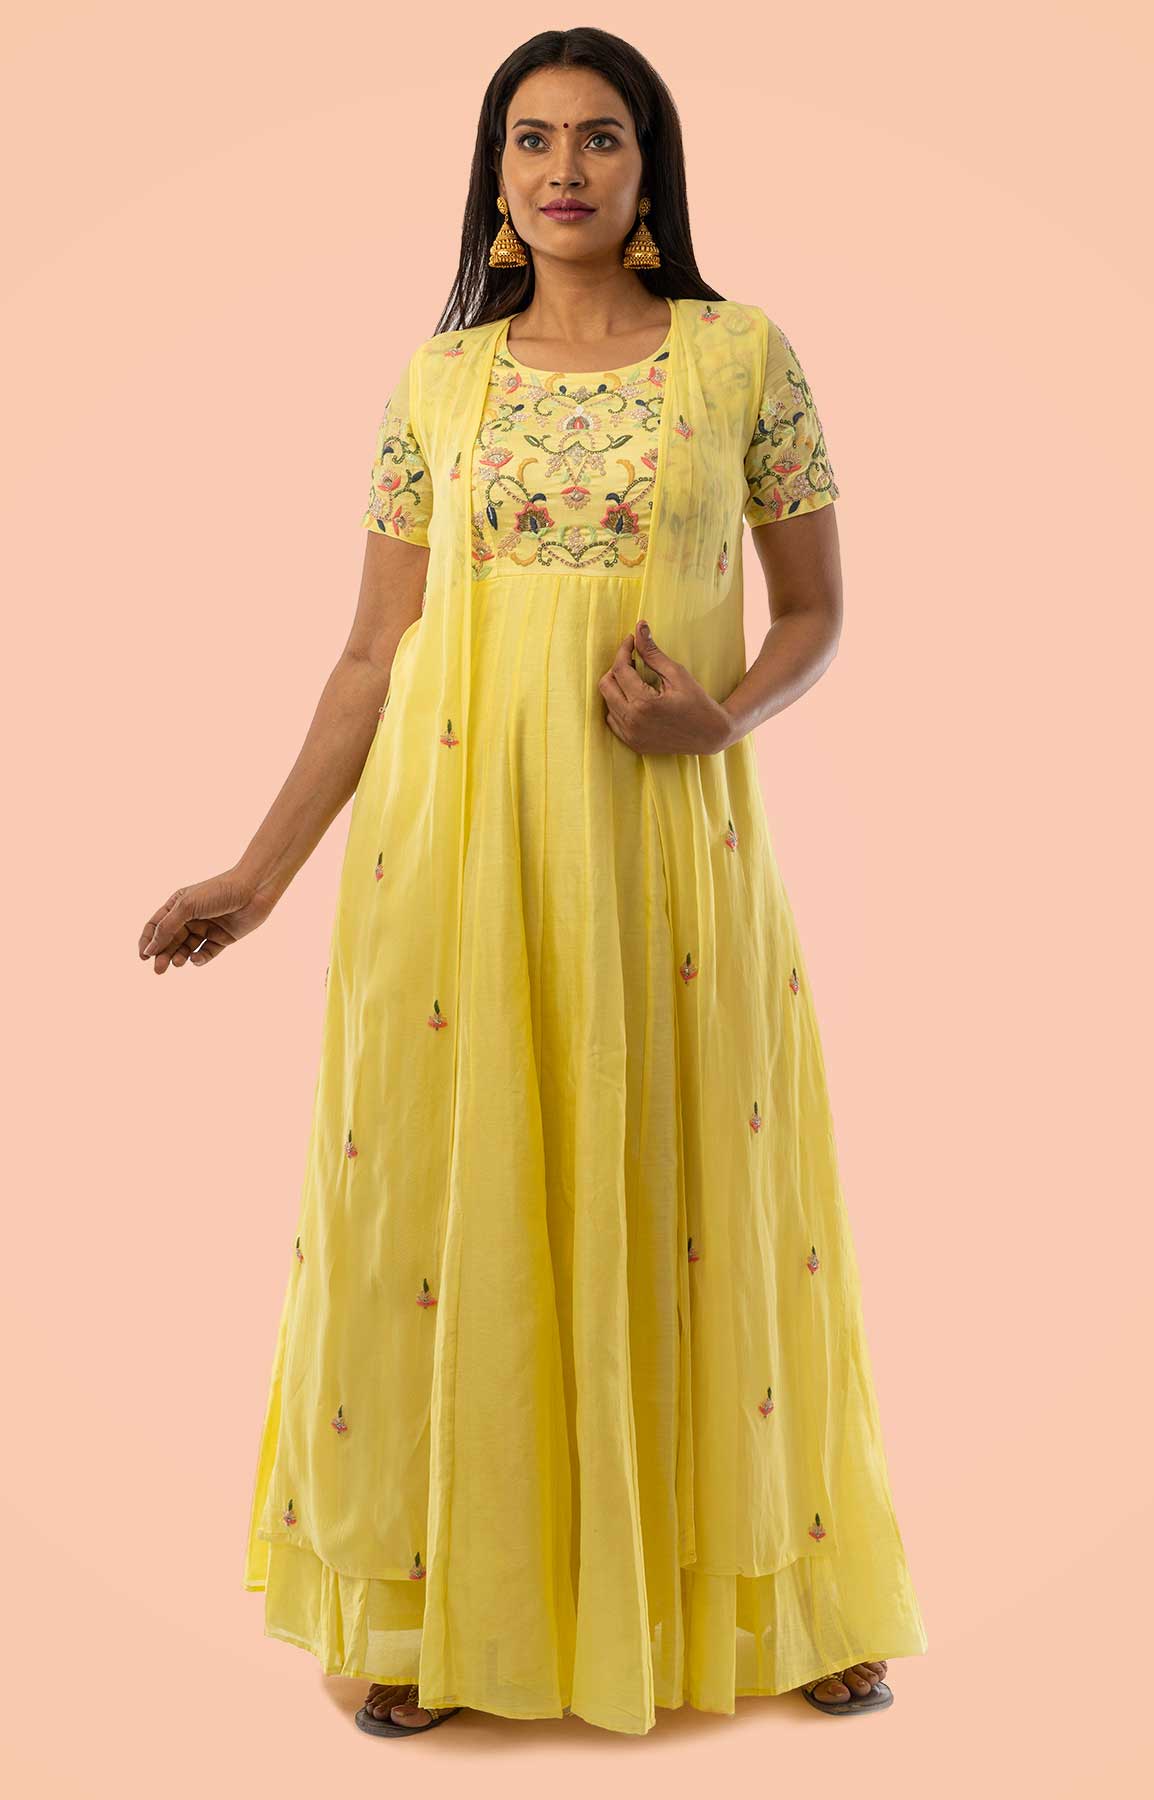 Lemon Yellow Chanderi Anarkali Suit With Georgette Jacket With Cut Dana And Resham Work – Viraaya By Ushnakmals